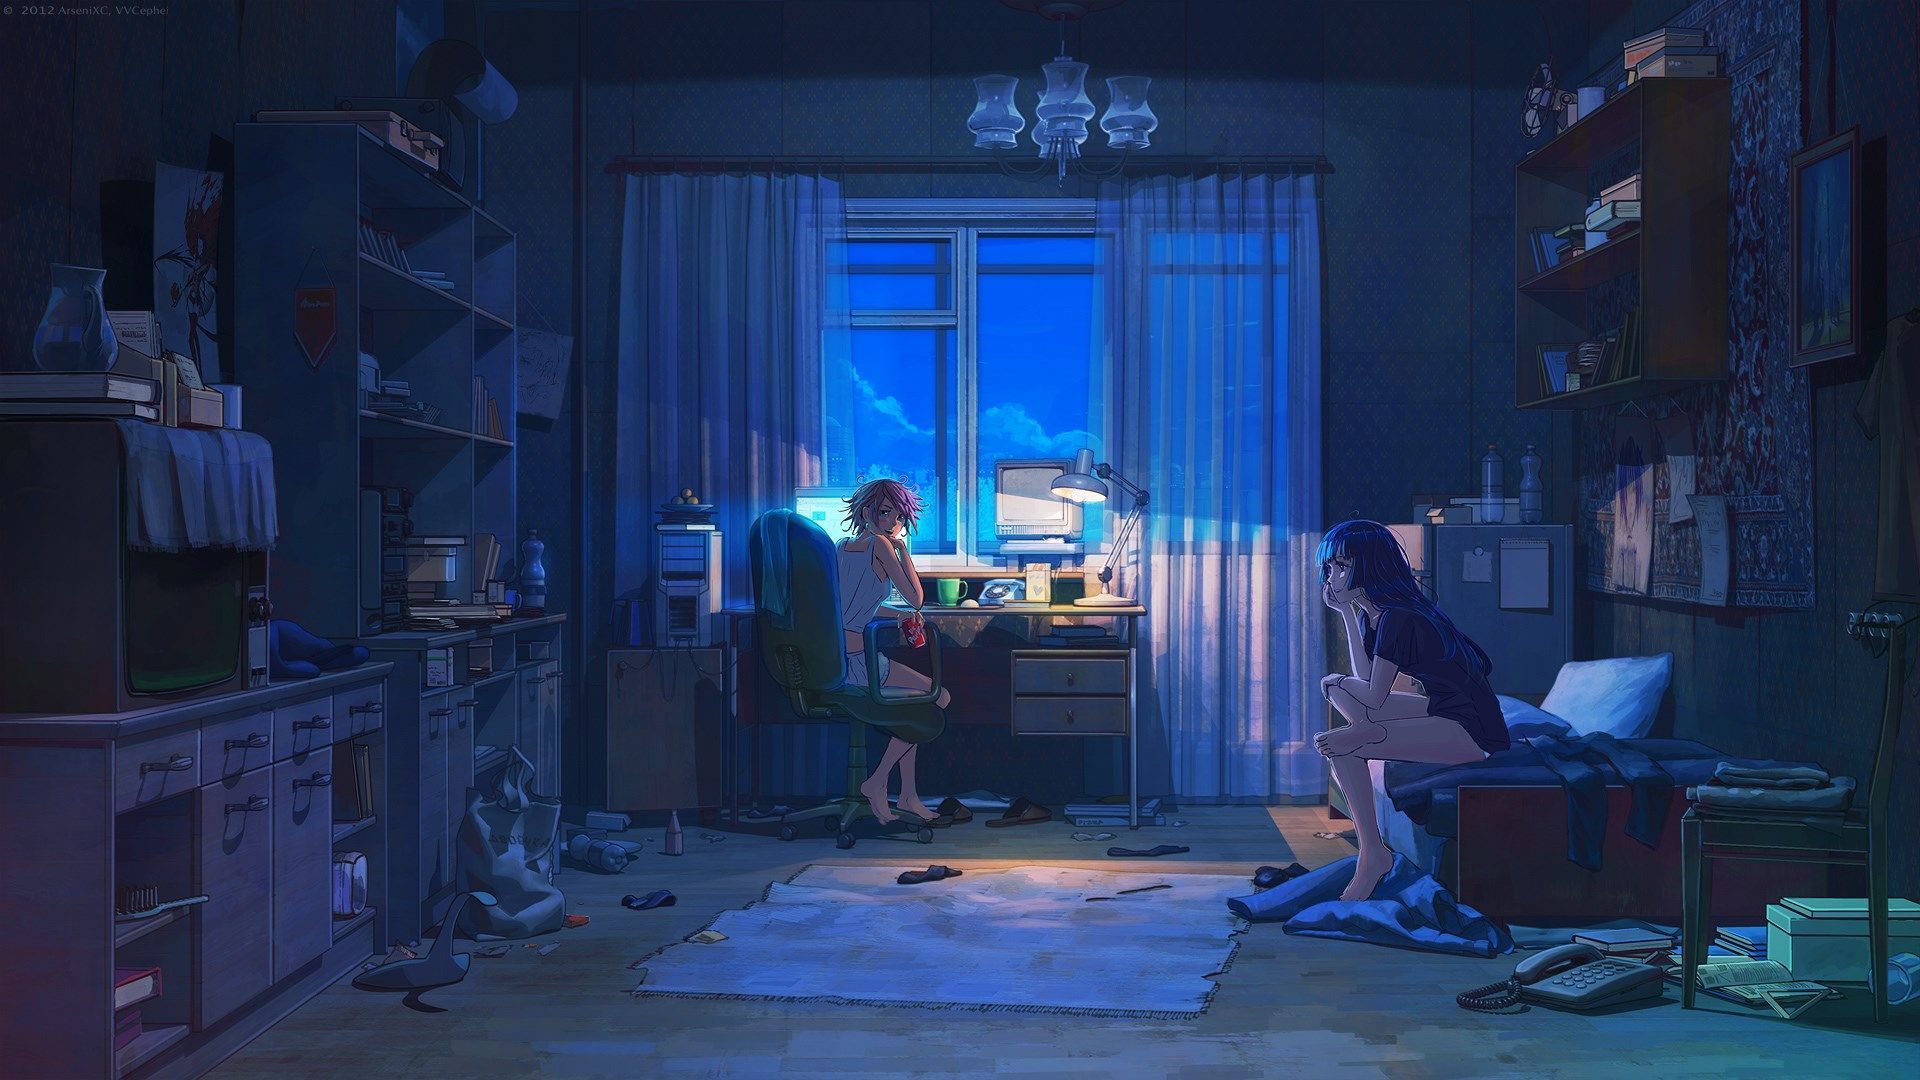 wallpaper for desktop, laptop | bl87-art-trip-anime-night